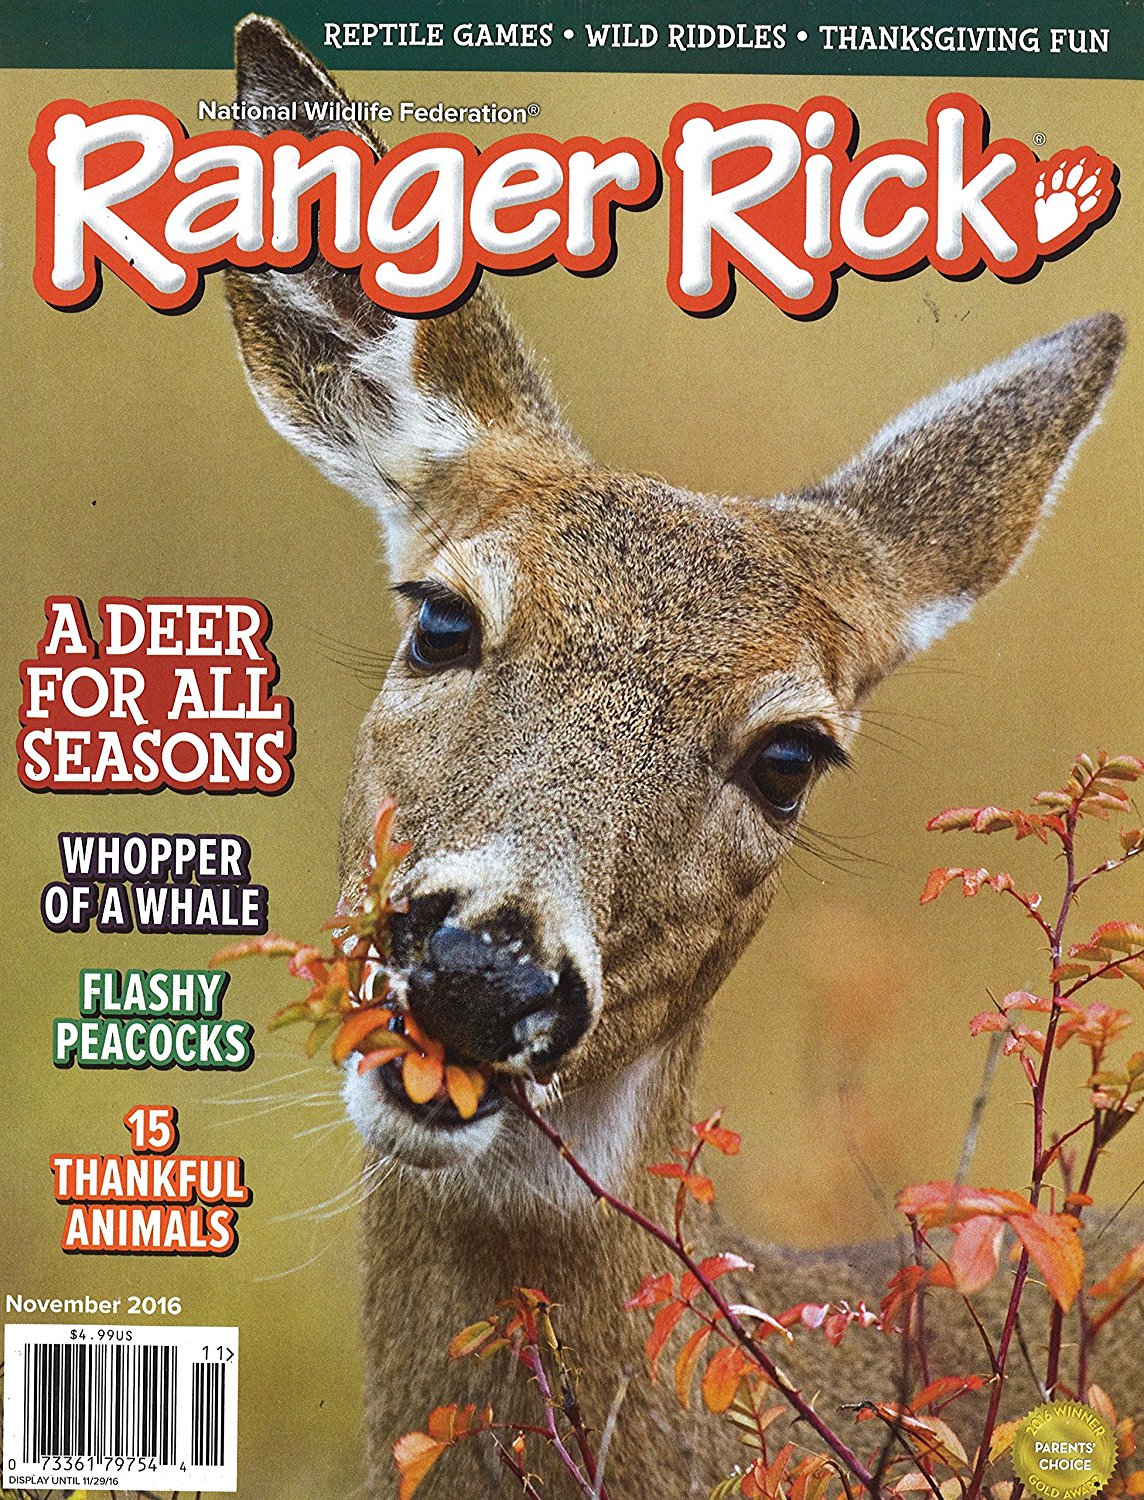 DEAL ALERT: Ranger Rick Magazine